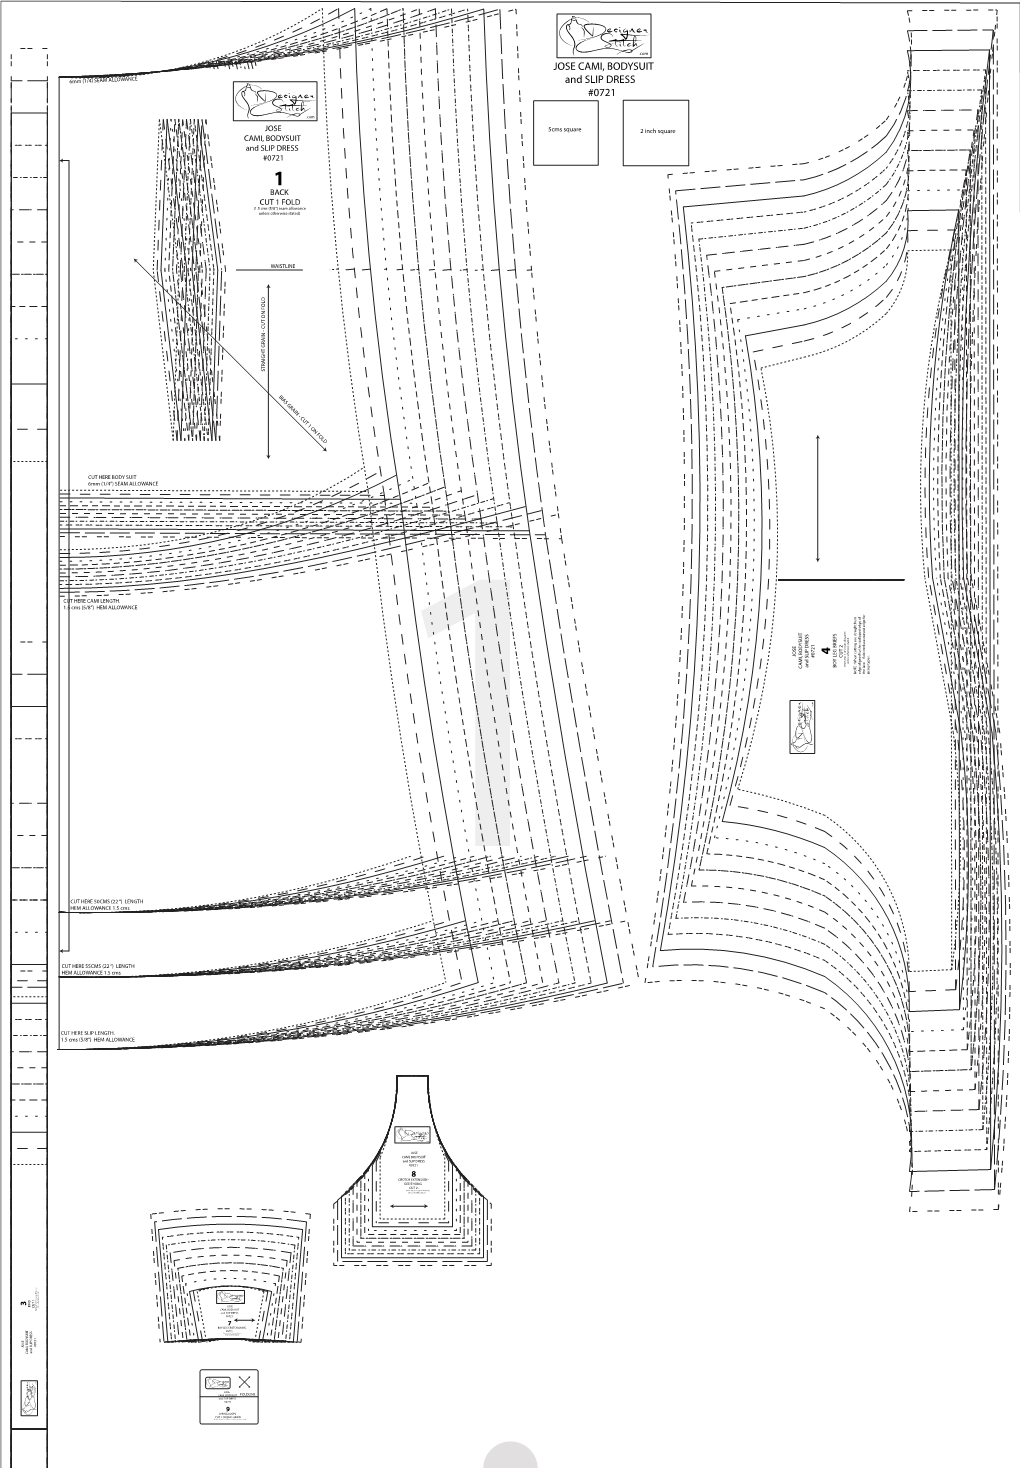 Jose Cami Bodysuit Slip Dress Cup Size C A0 Copy Shop Pattern